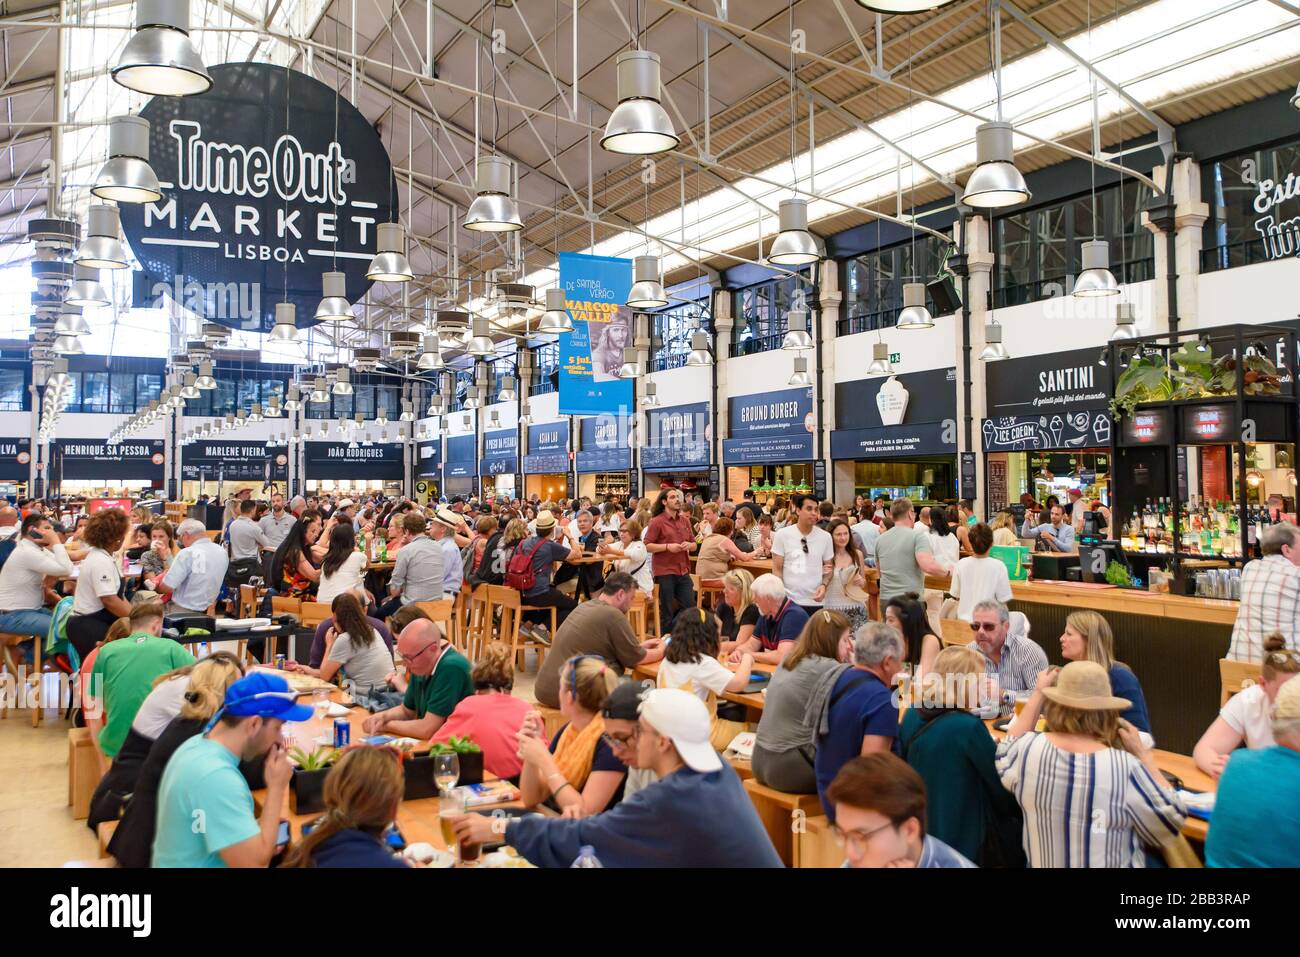 Time out Market, una sala alimentare a Lisbona, Portogallo Foto Stock